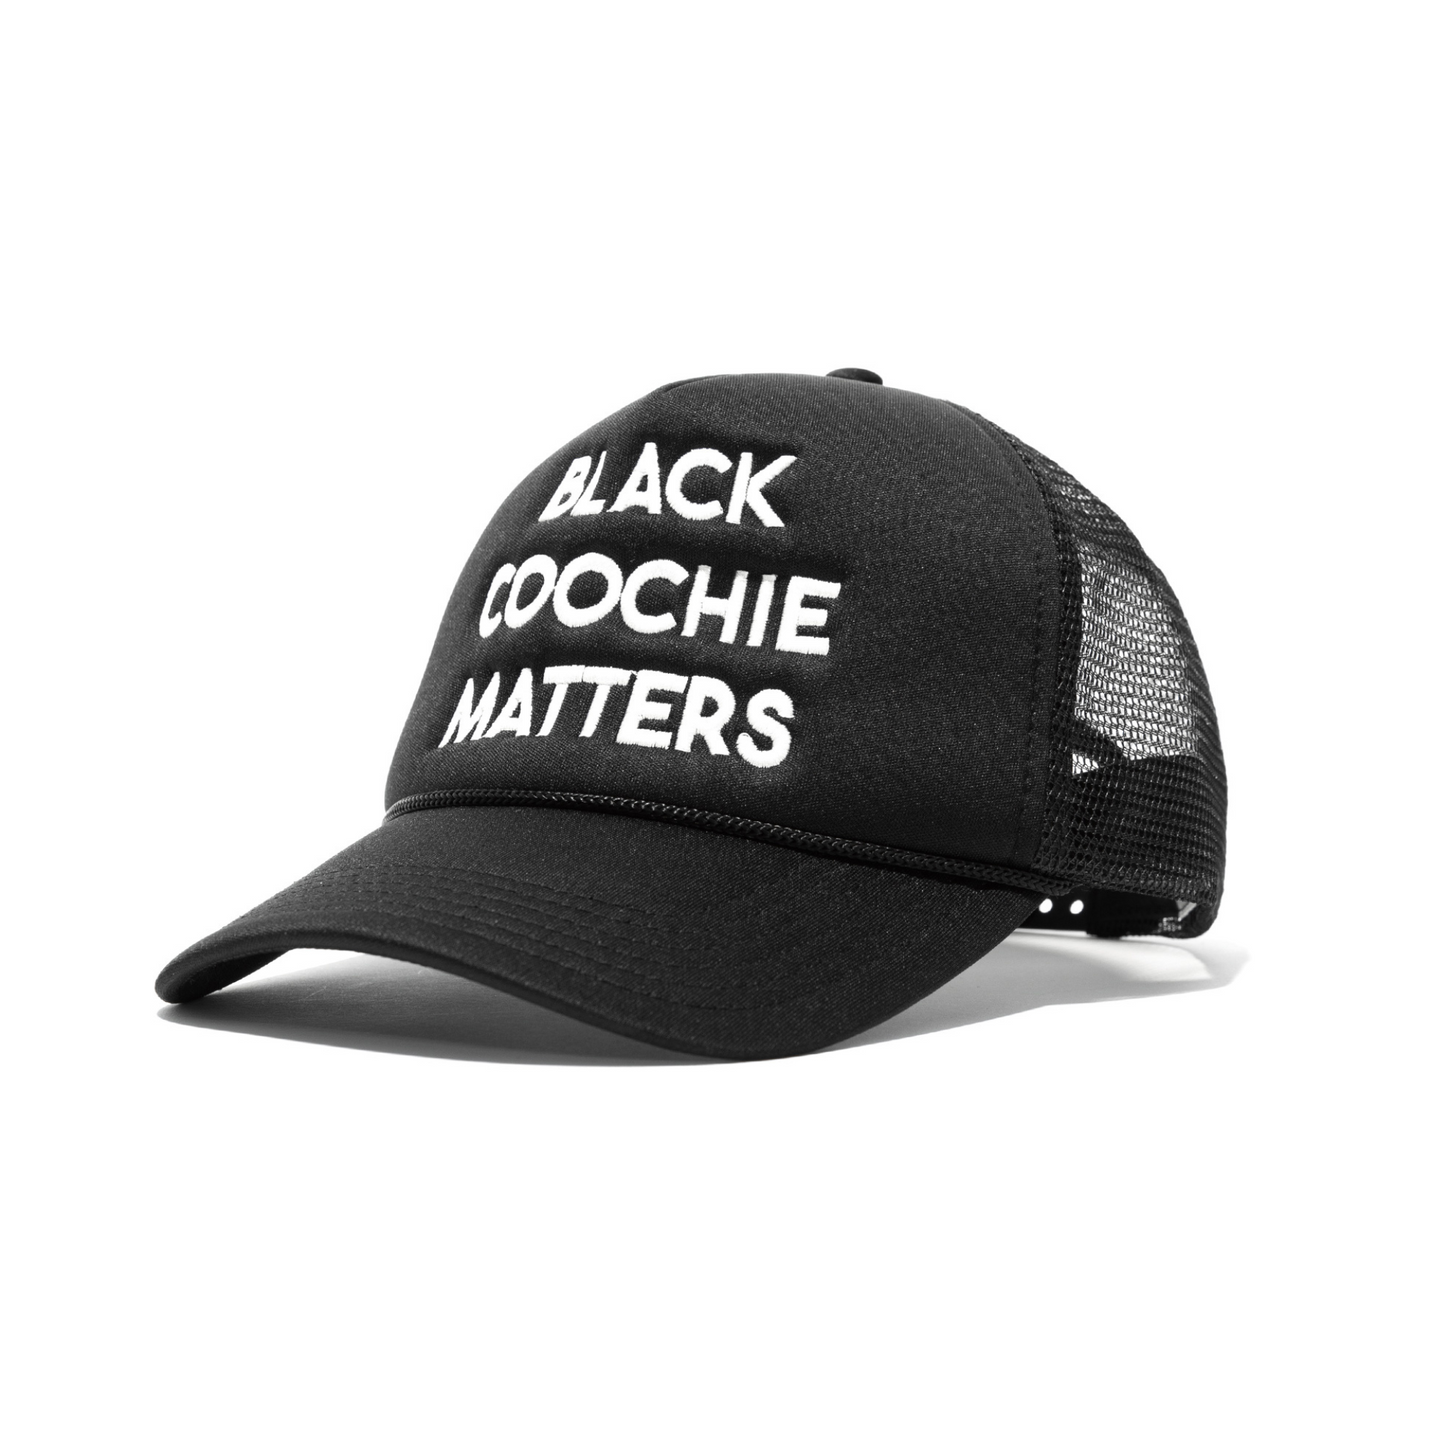 Black Coochie Matters Trucker Hat Black